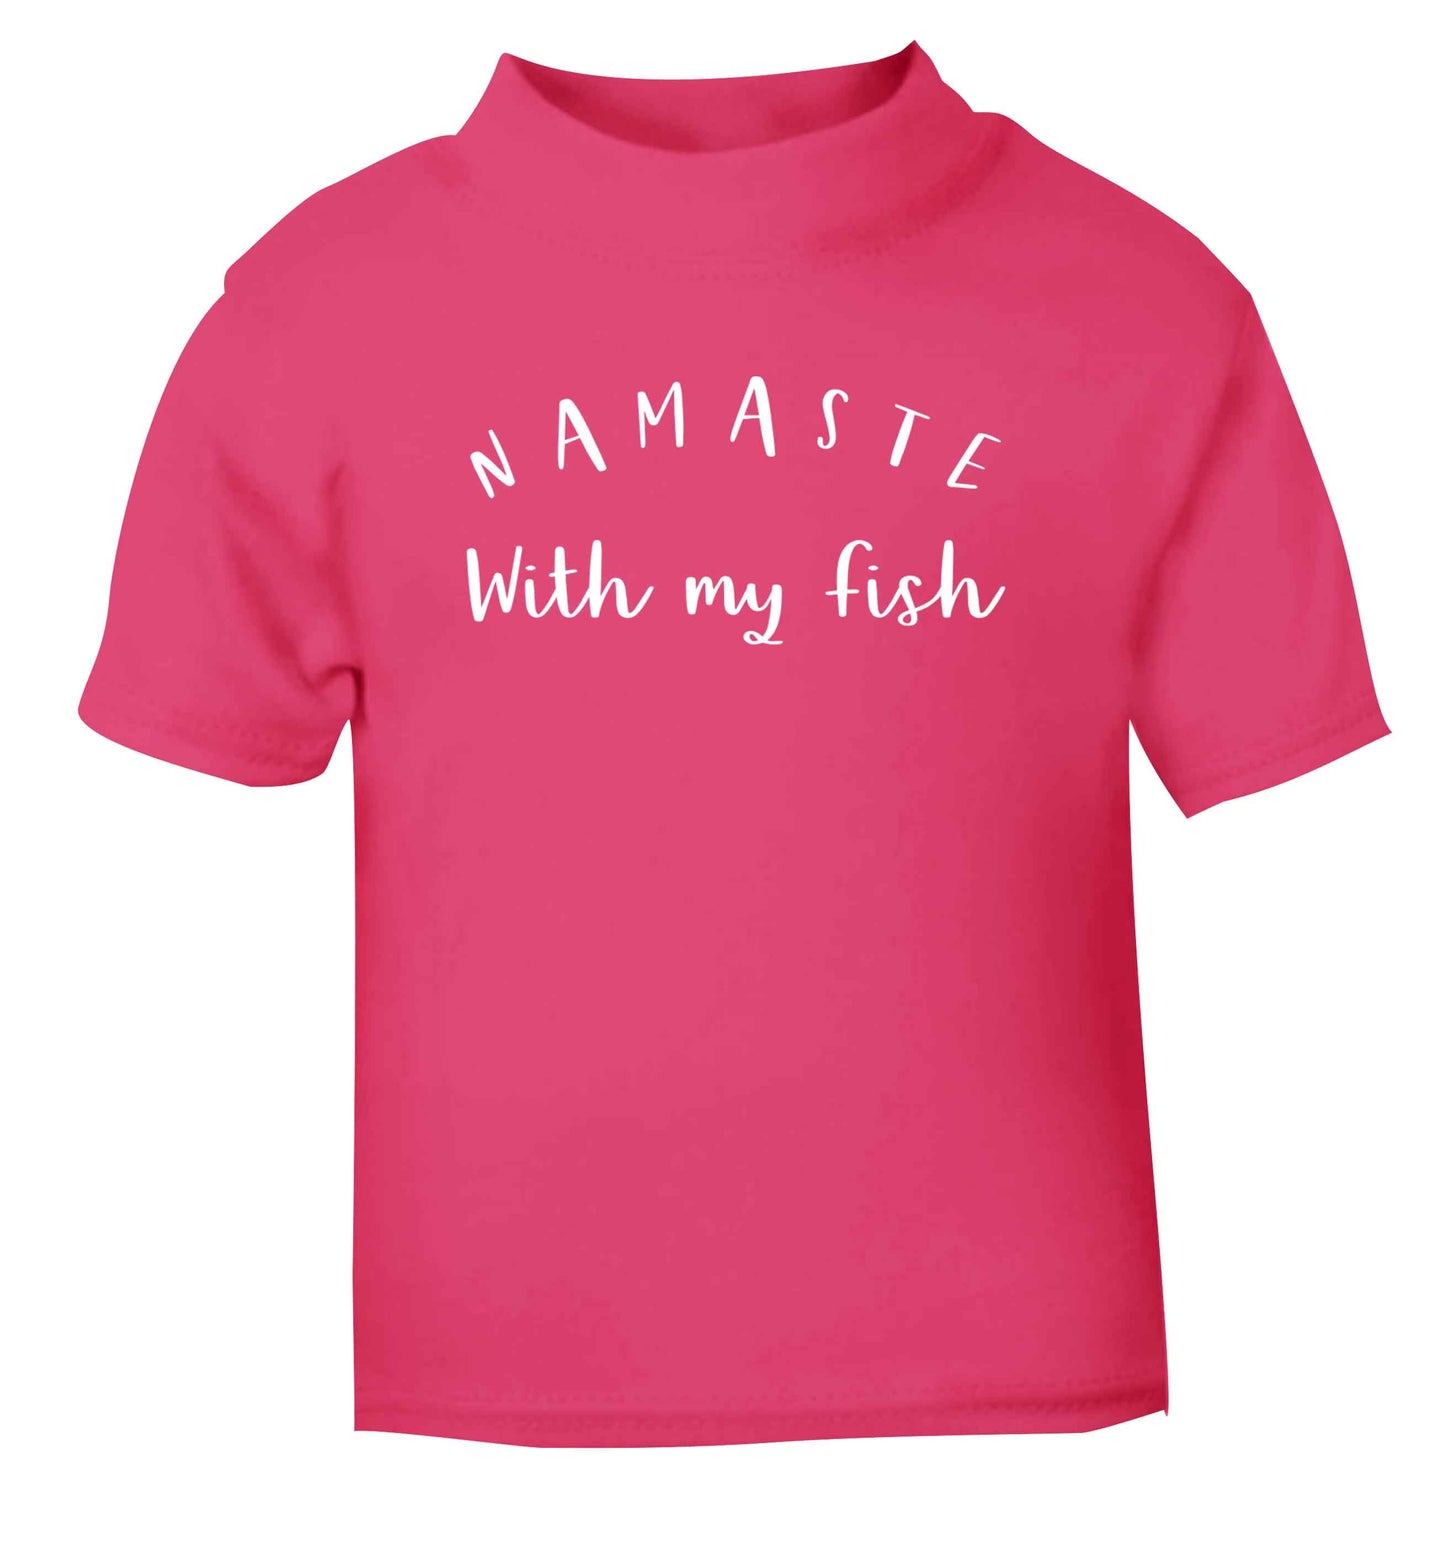 Namaste with my fish pink Baby Toddler Tshirt 2 Years